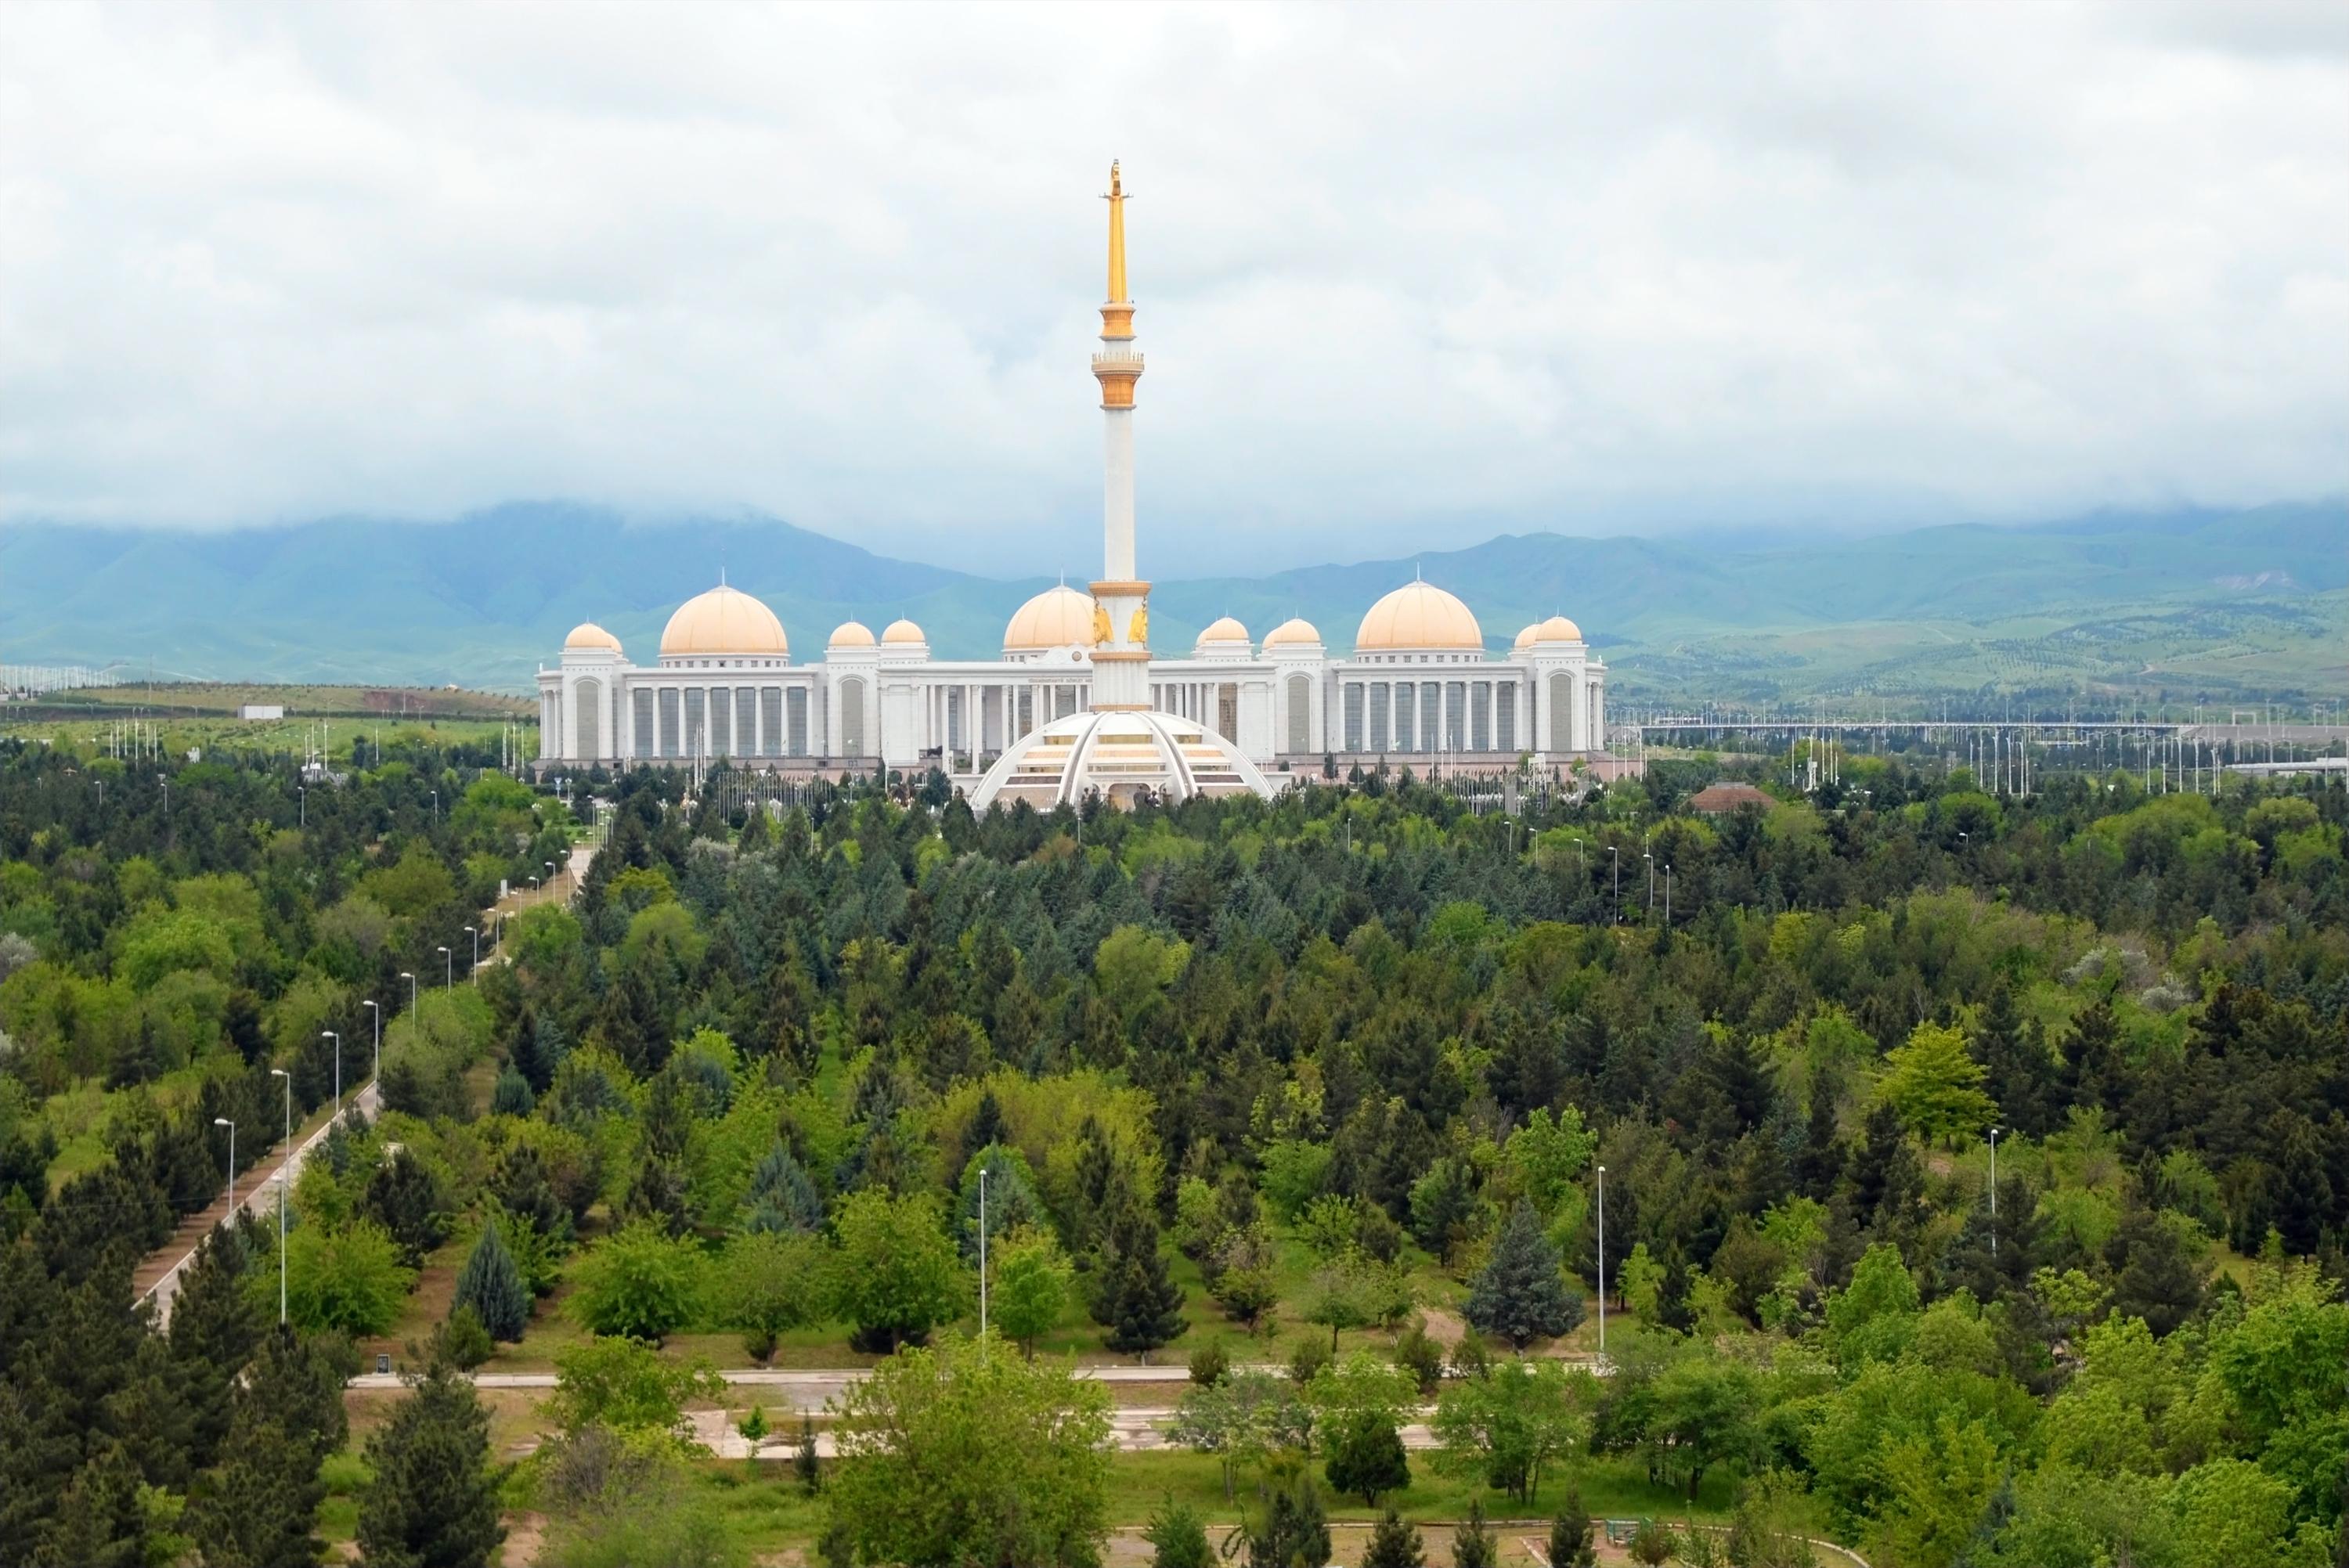 Independence monument in Ashgabat - Photo credits: Rini Kools / Shutterstock.com